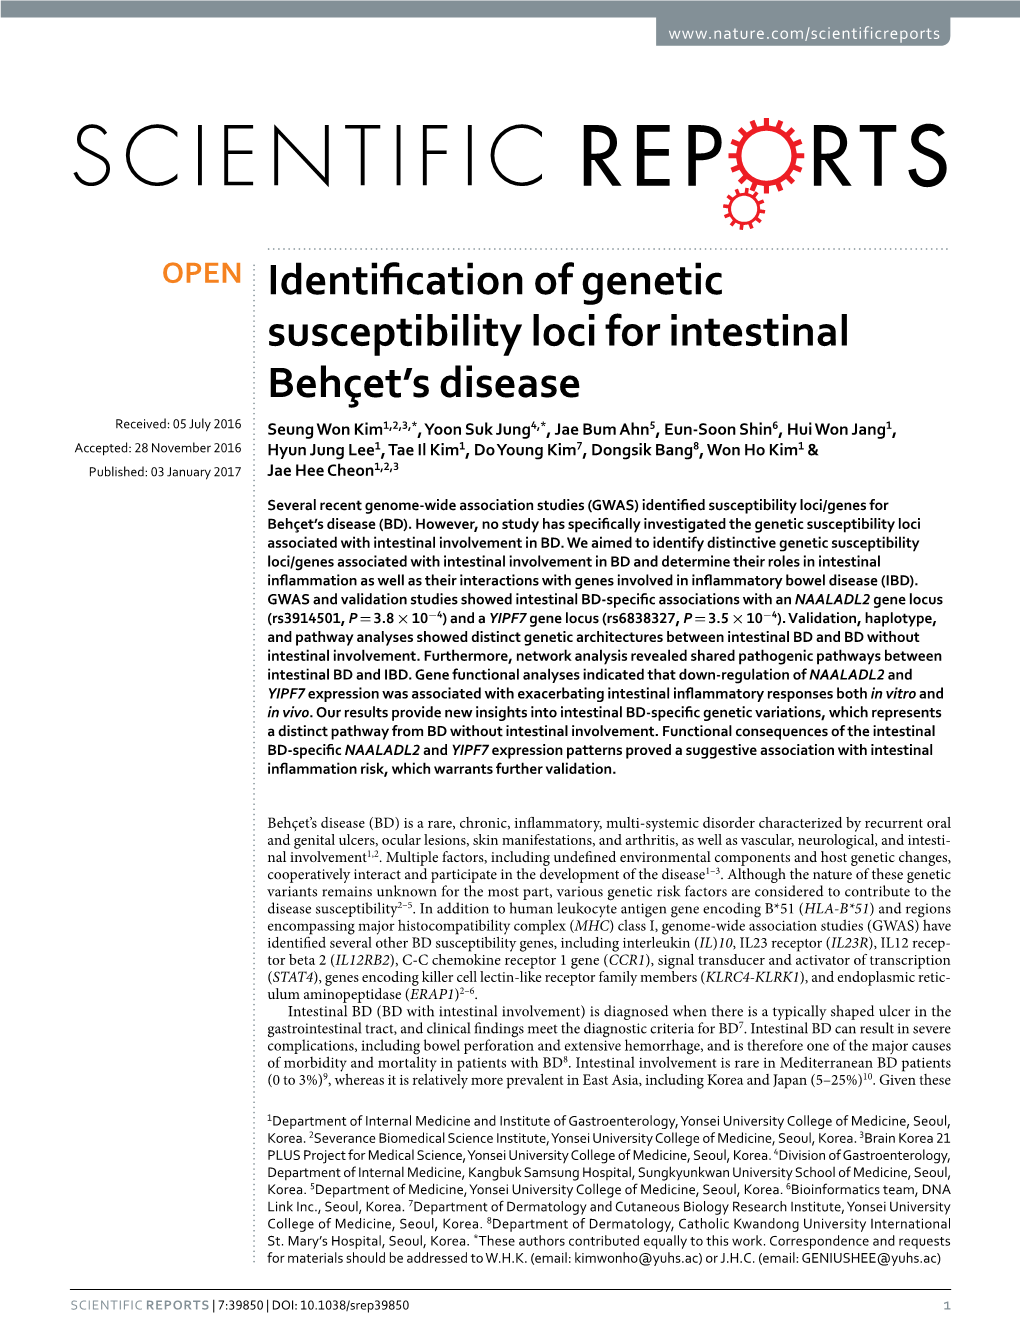 Identification of Genetic Susceptibility Loci for Intestinal Behçet's Disease